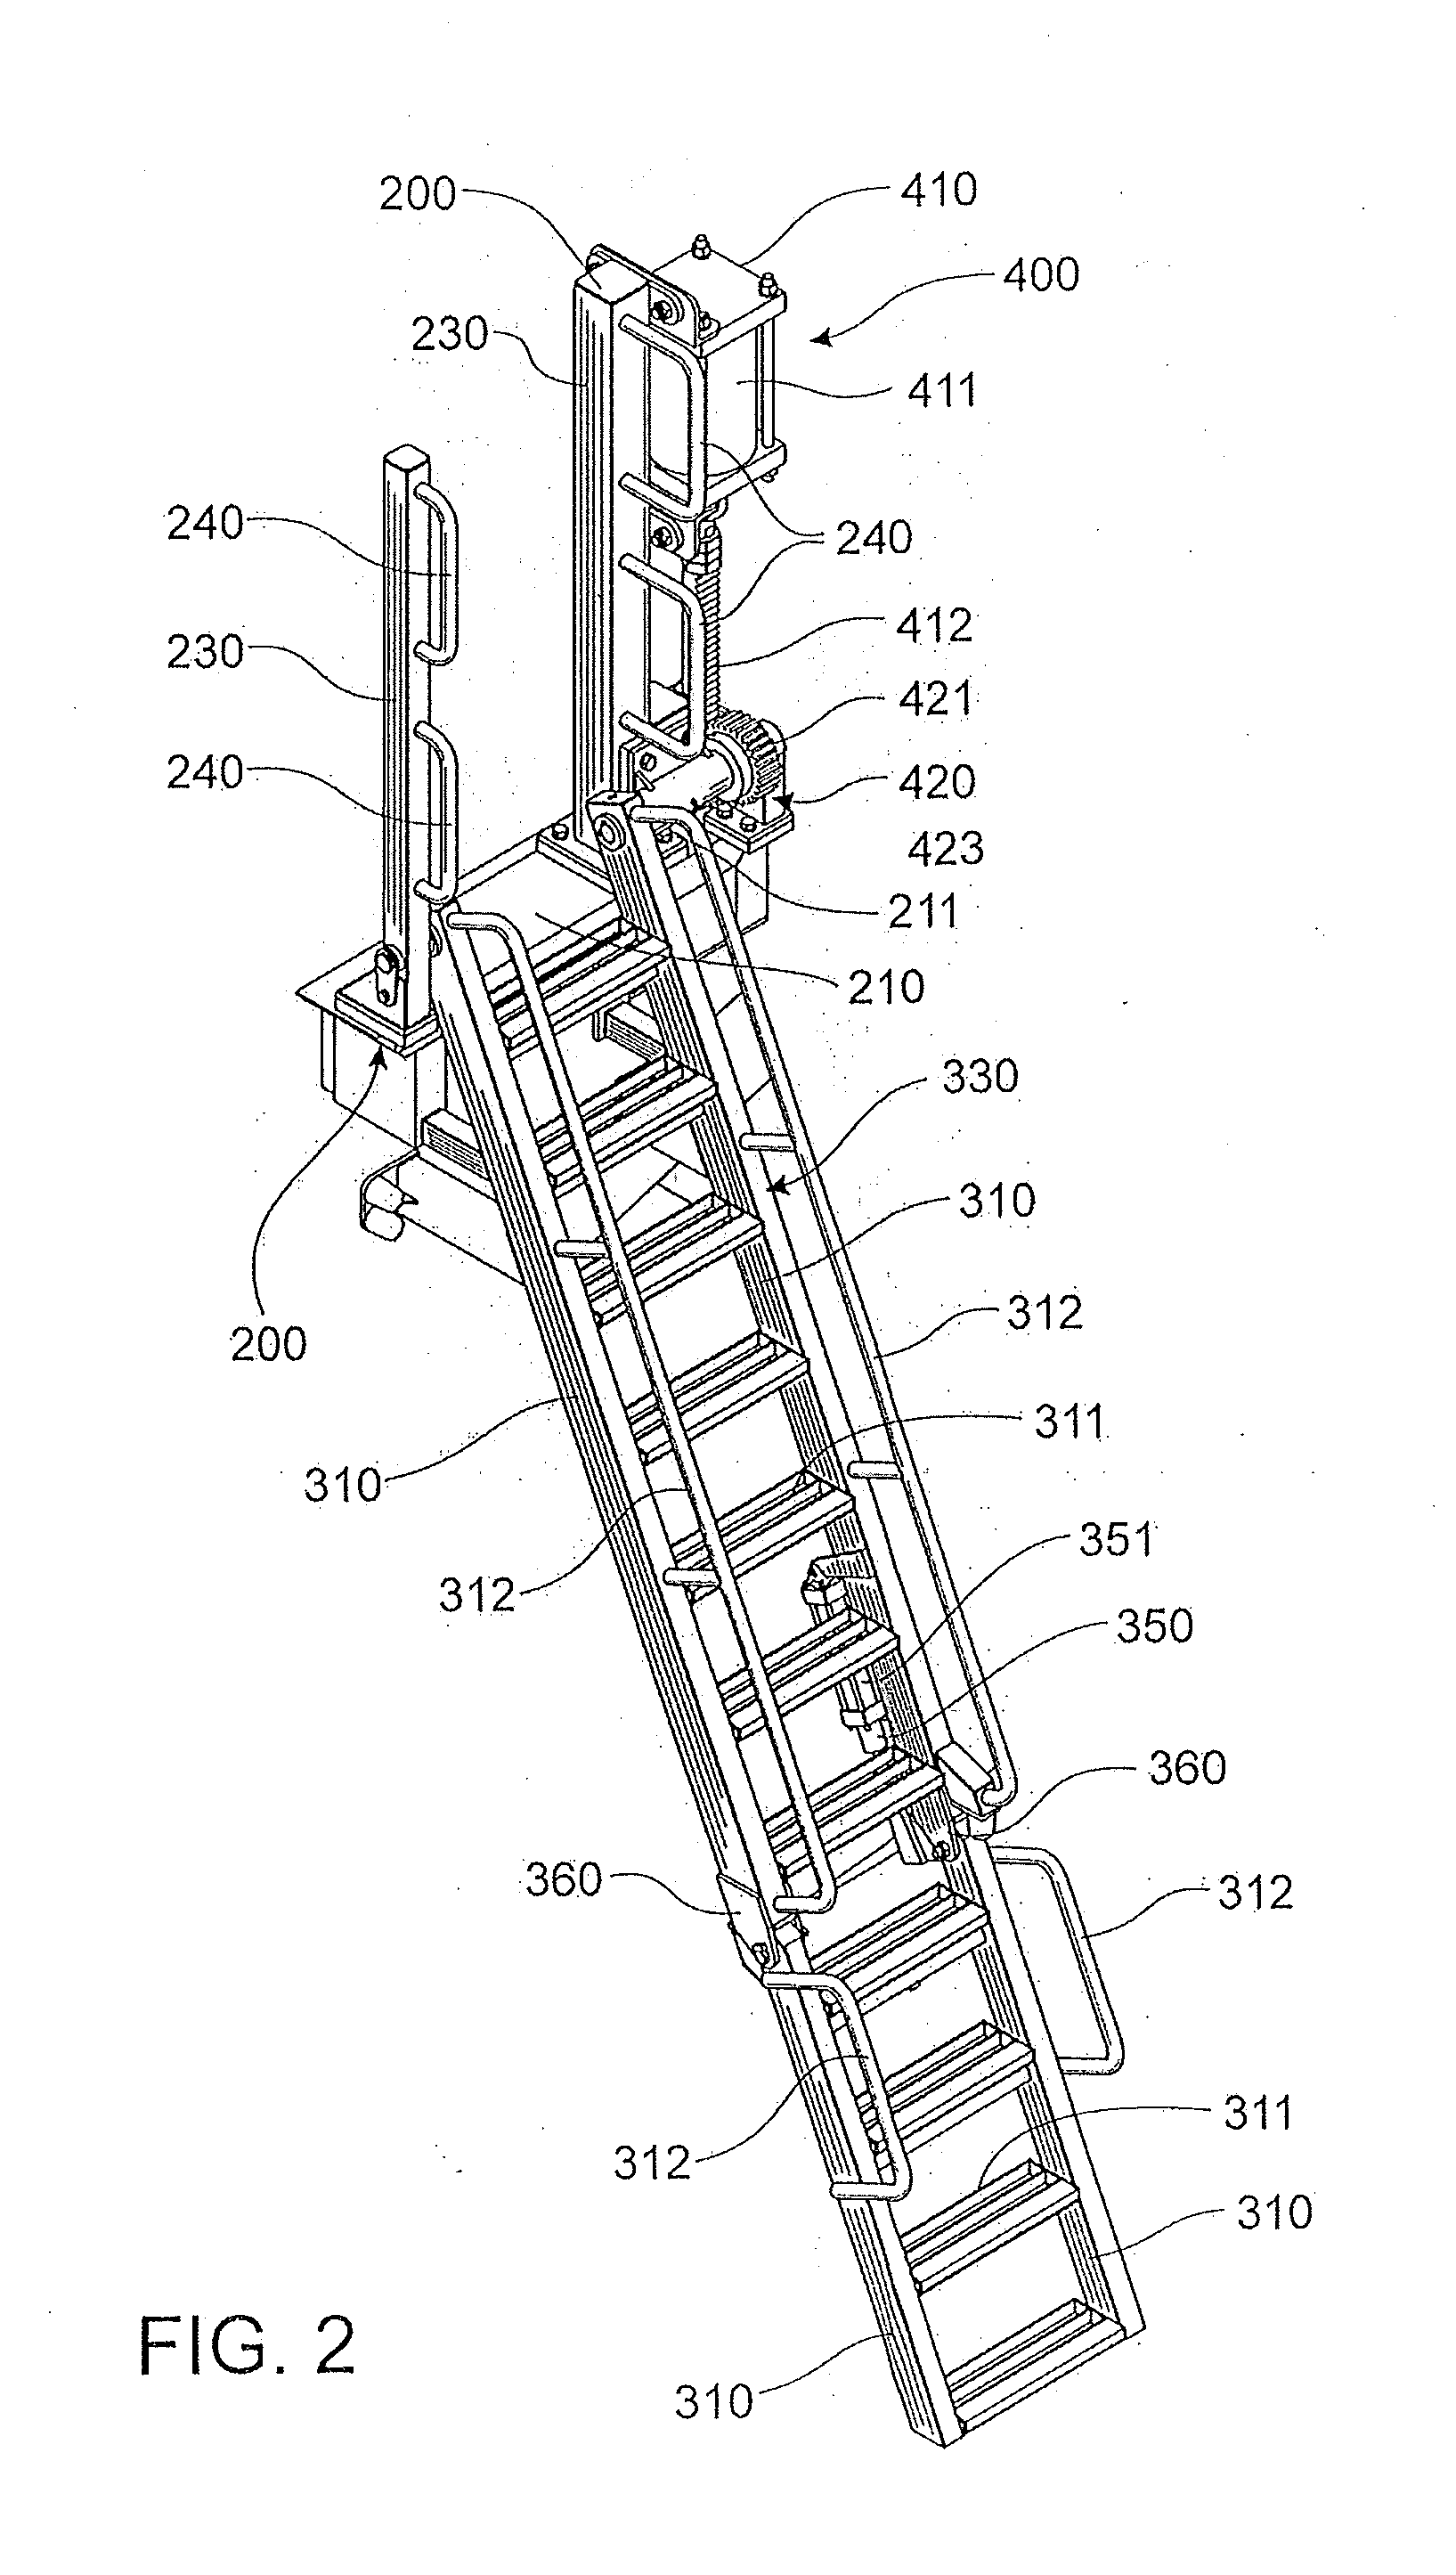 Ladder assembly for equipment